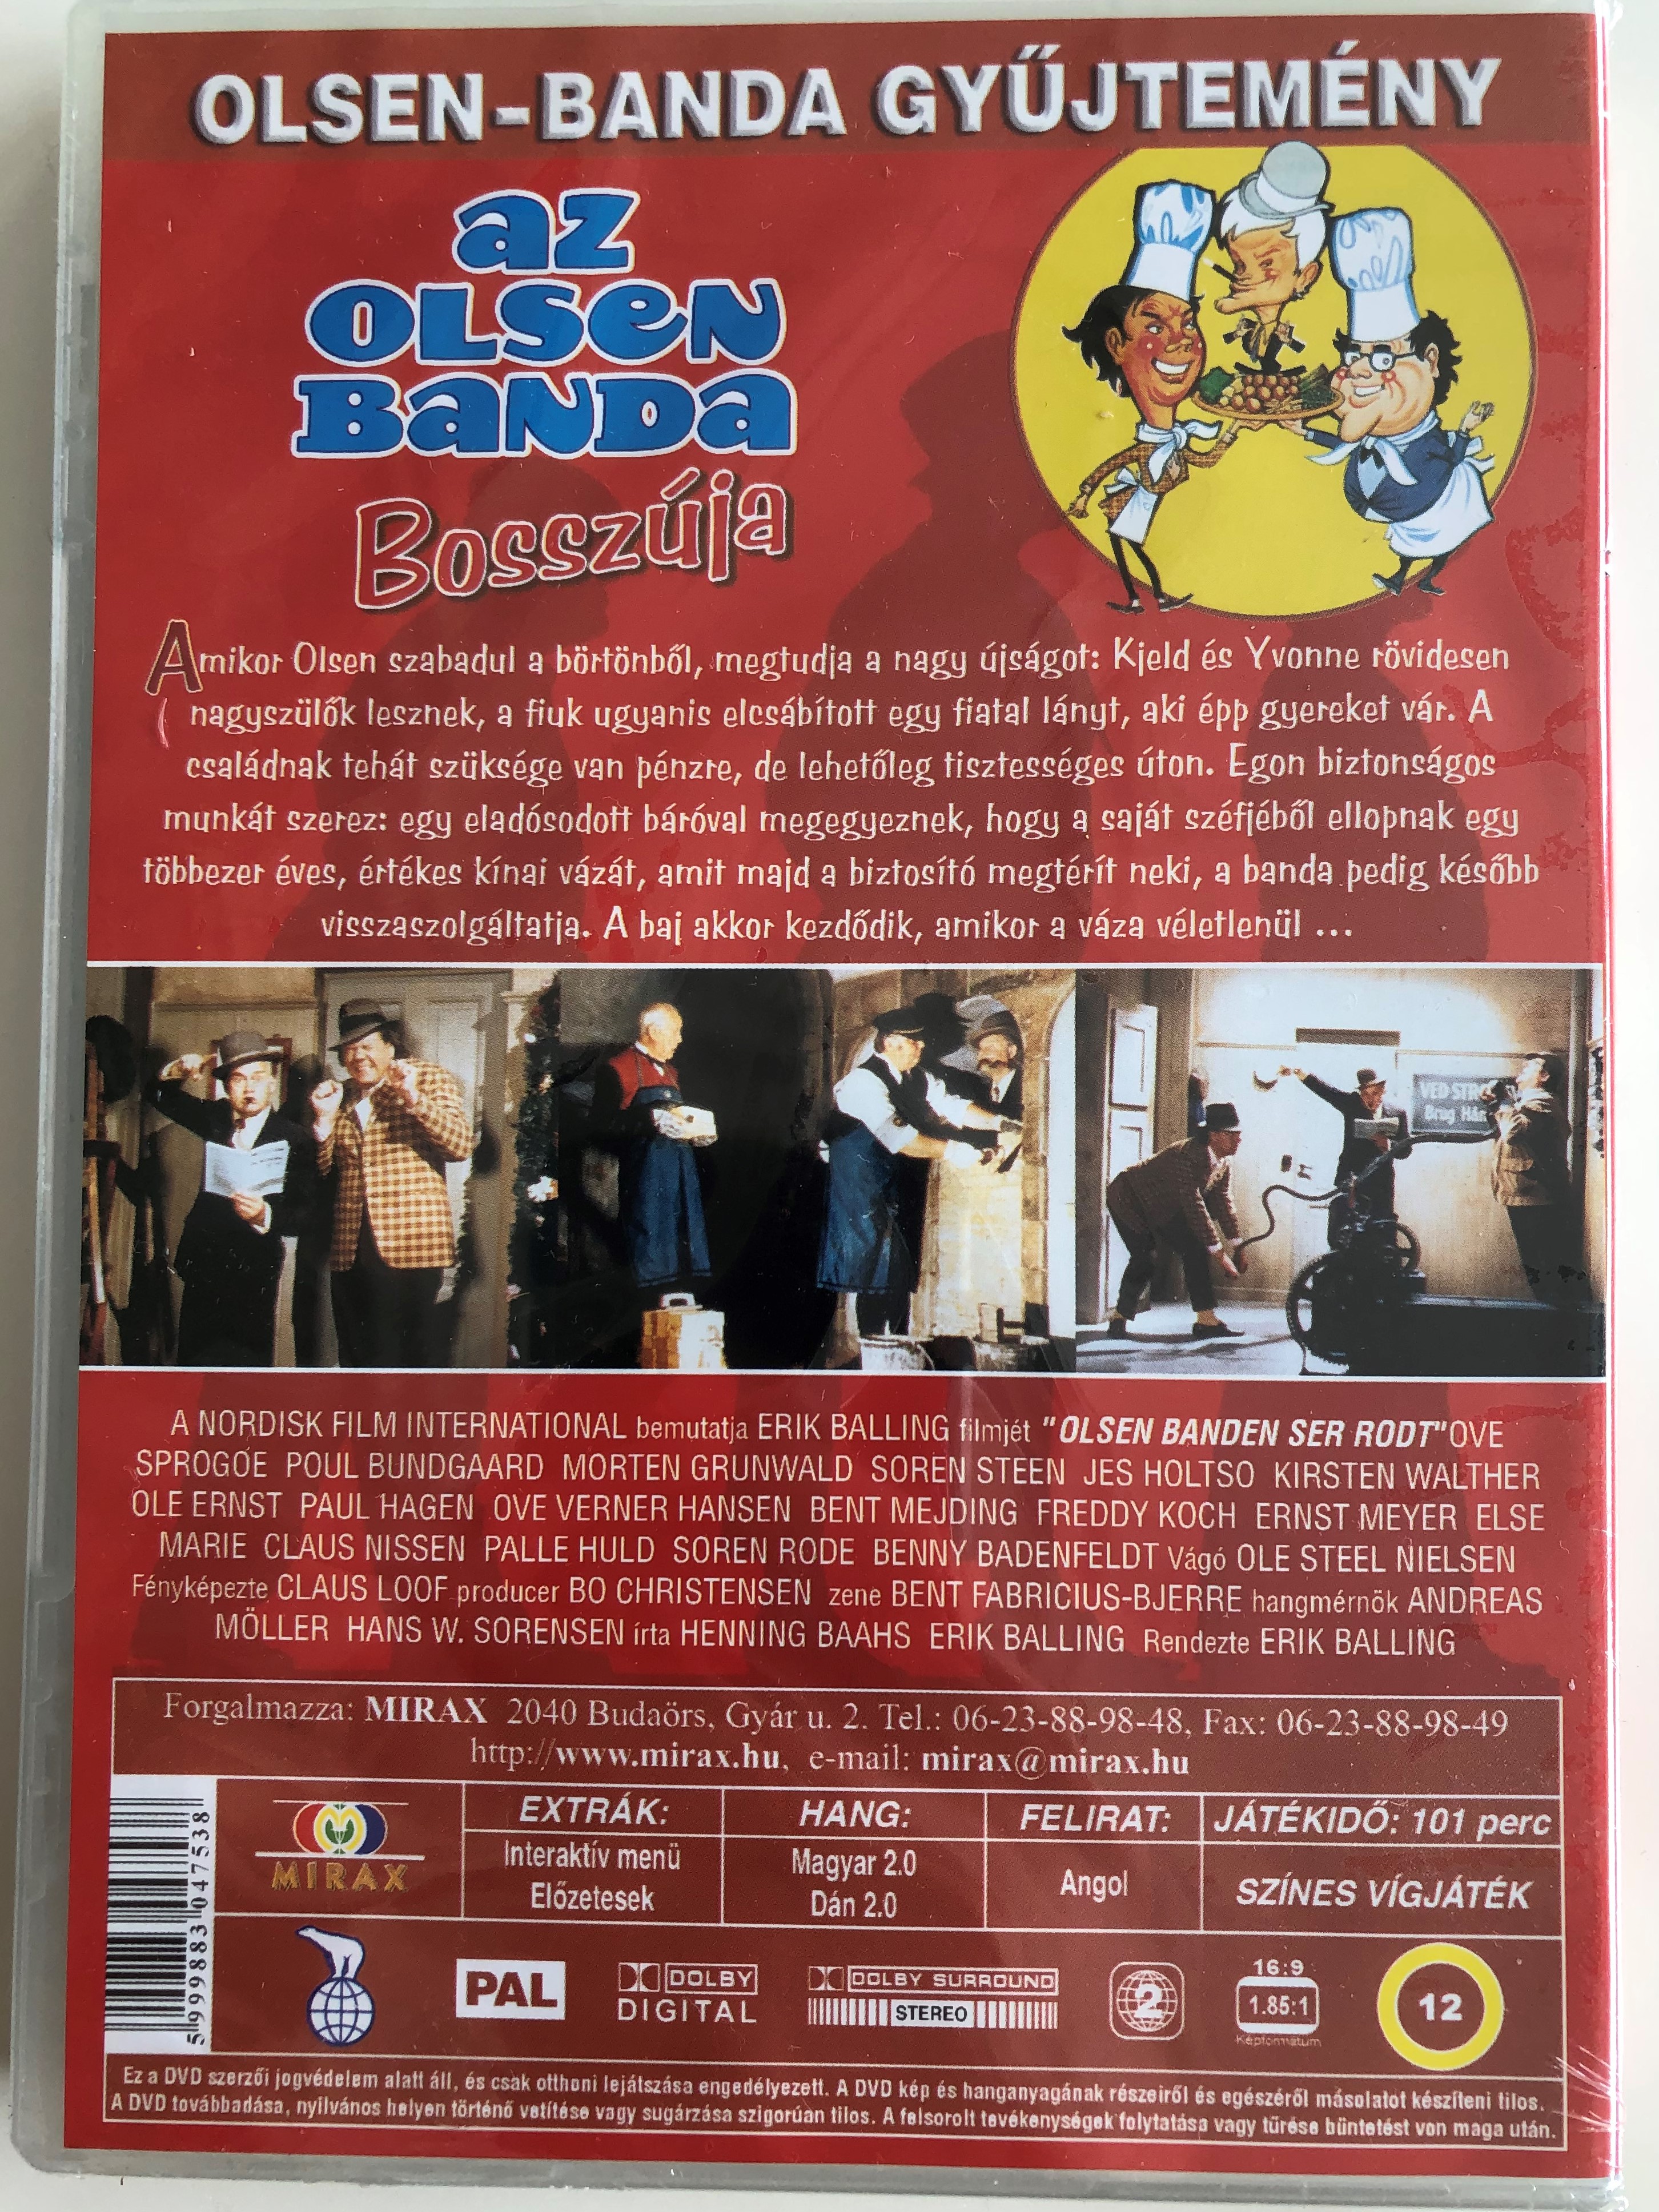 Olsen Banden Ser Rodt DVD 1976 The Olsen Gang Sees Red - Az olsen Banda  bosszúja / Directed by Directed by Erik Balling / Starring: Ove Sprogøe,  Poul Bundgaard, Morten Grunwald, Peter